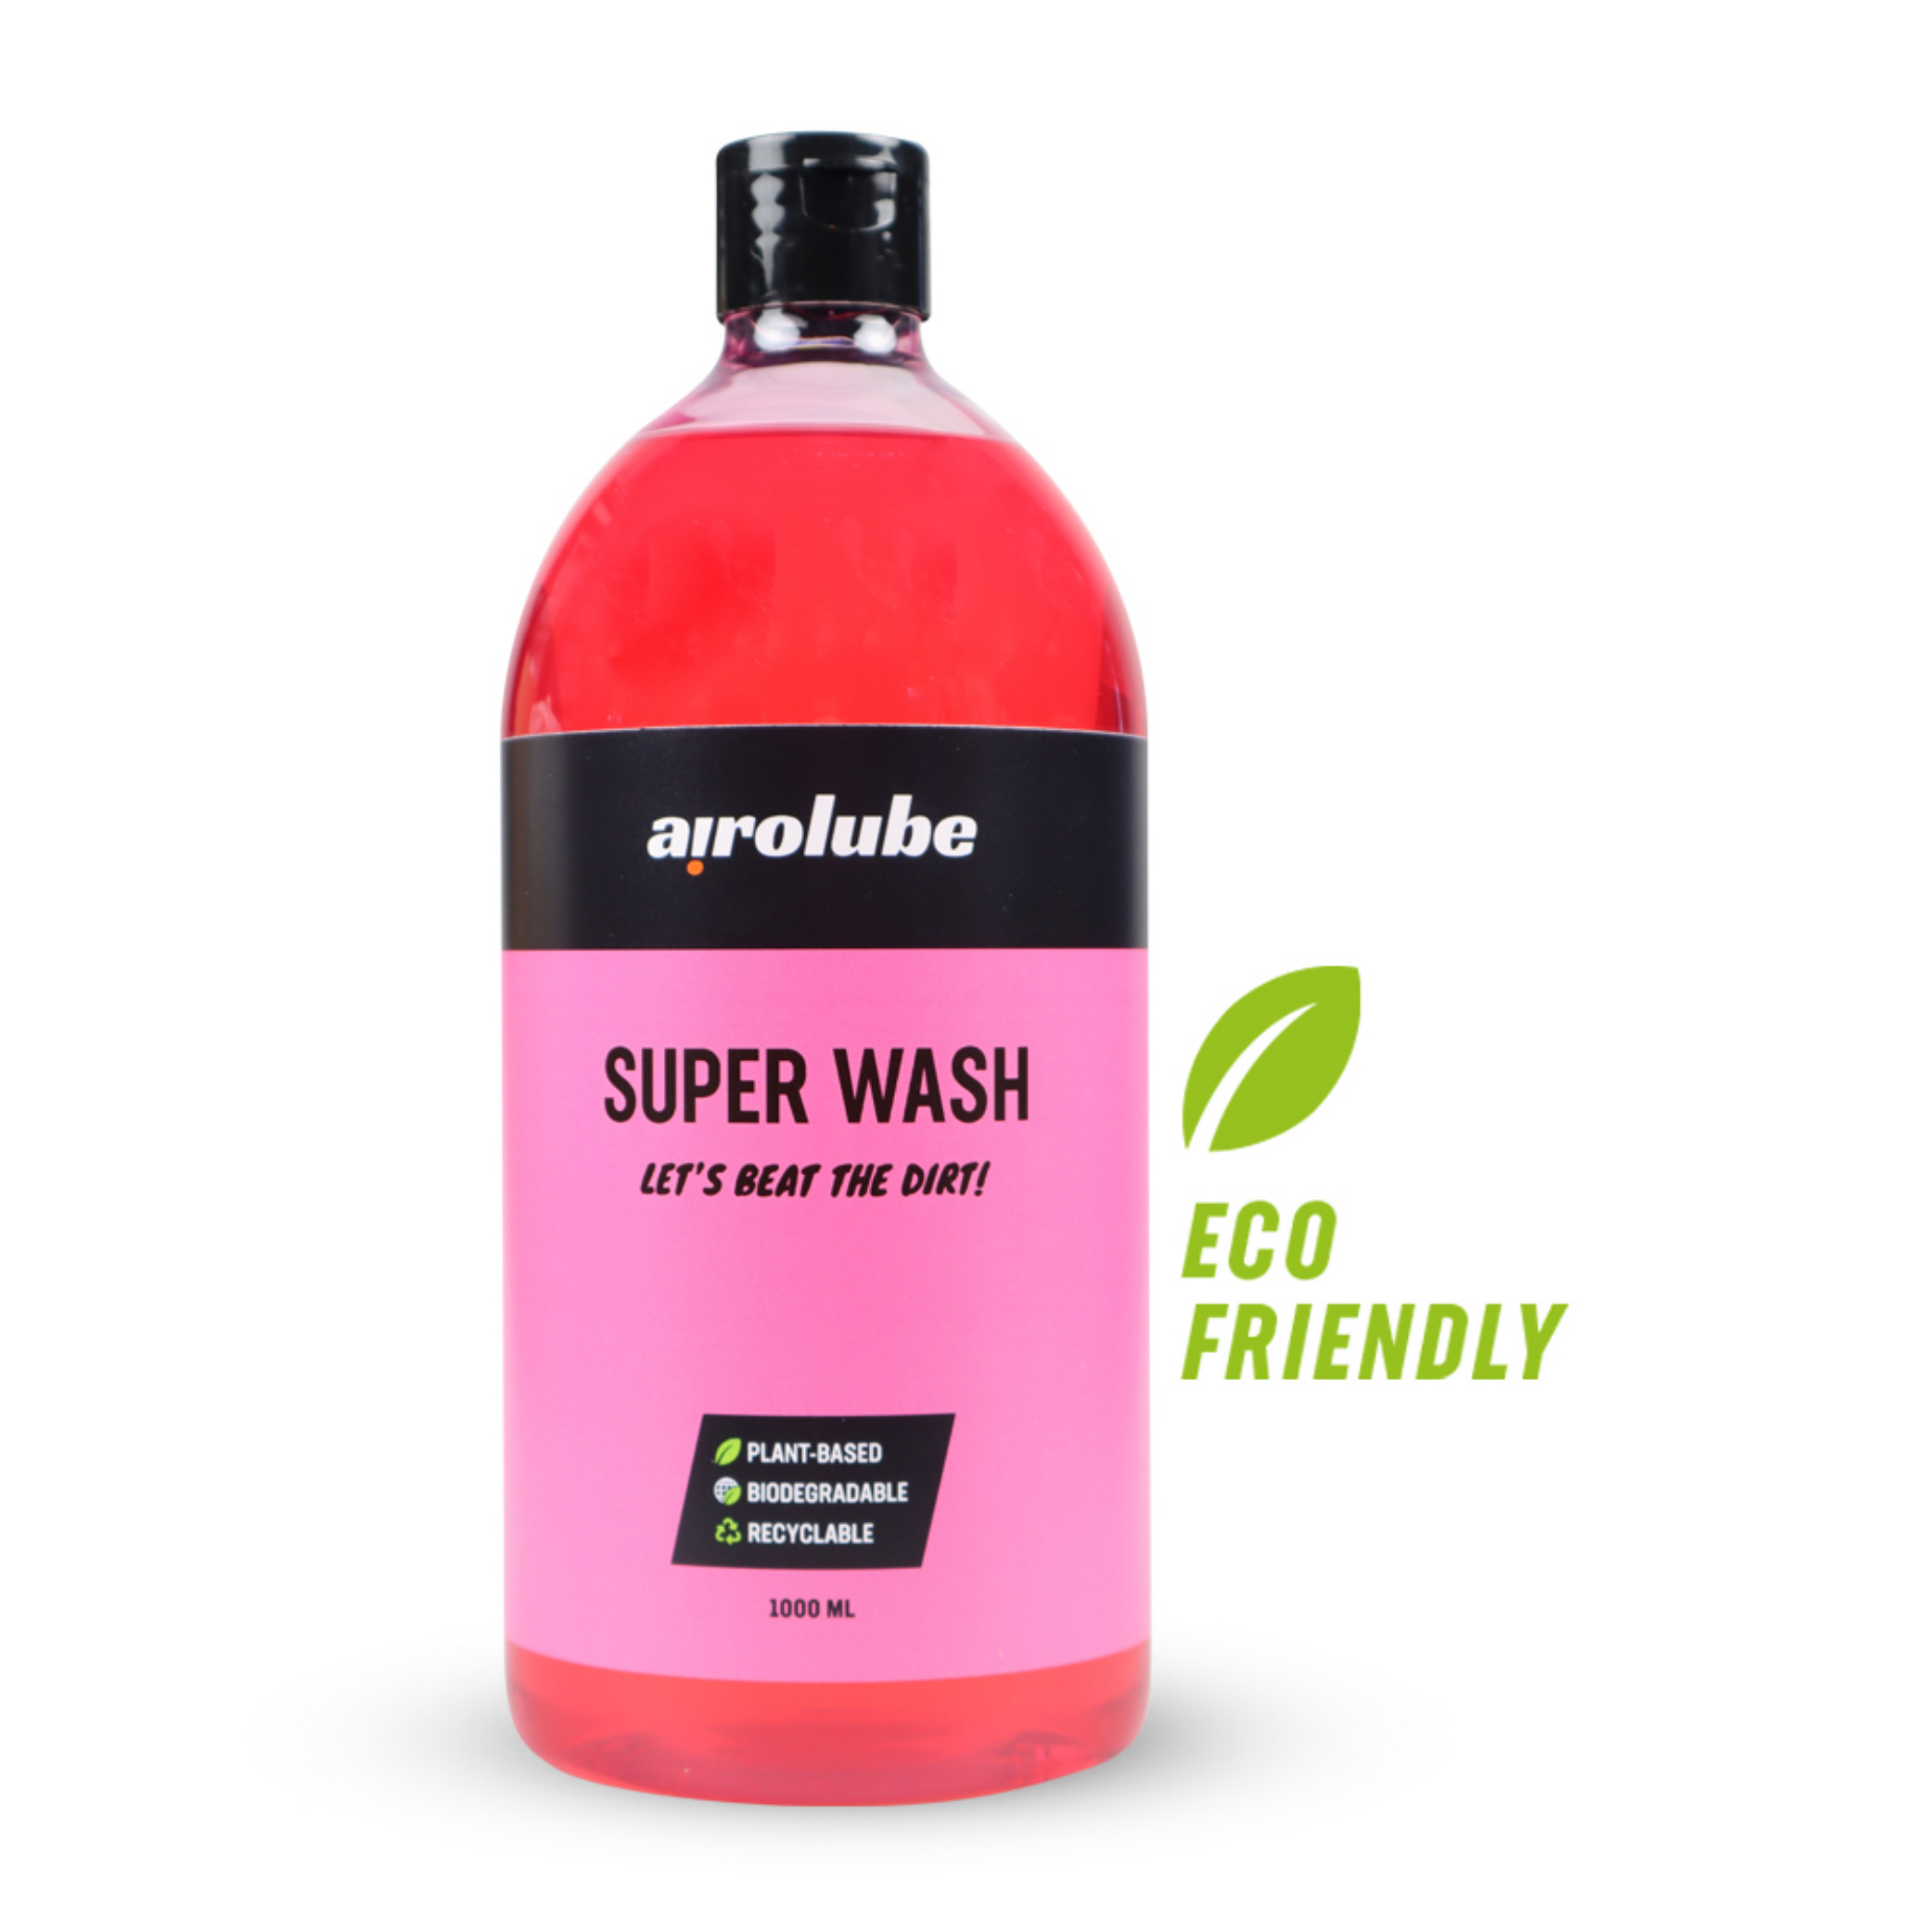 Super wash Airolube 1000ml